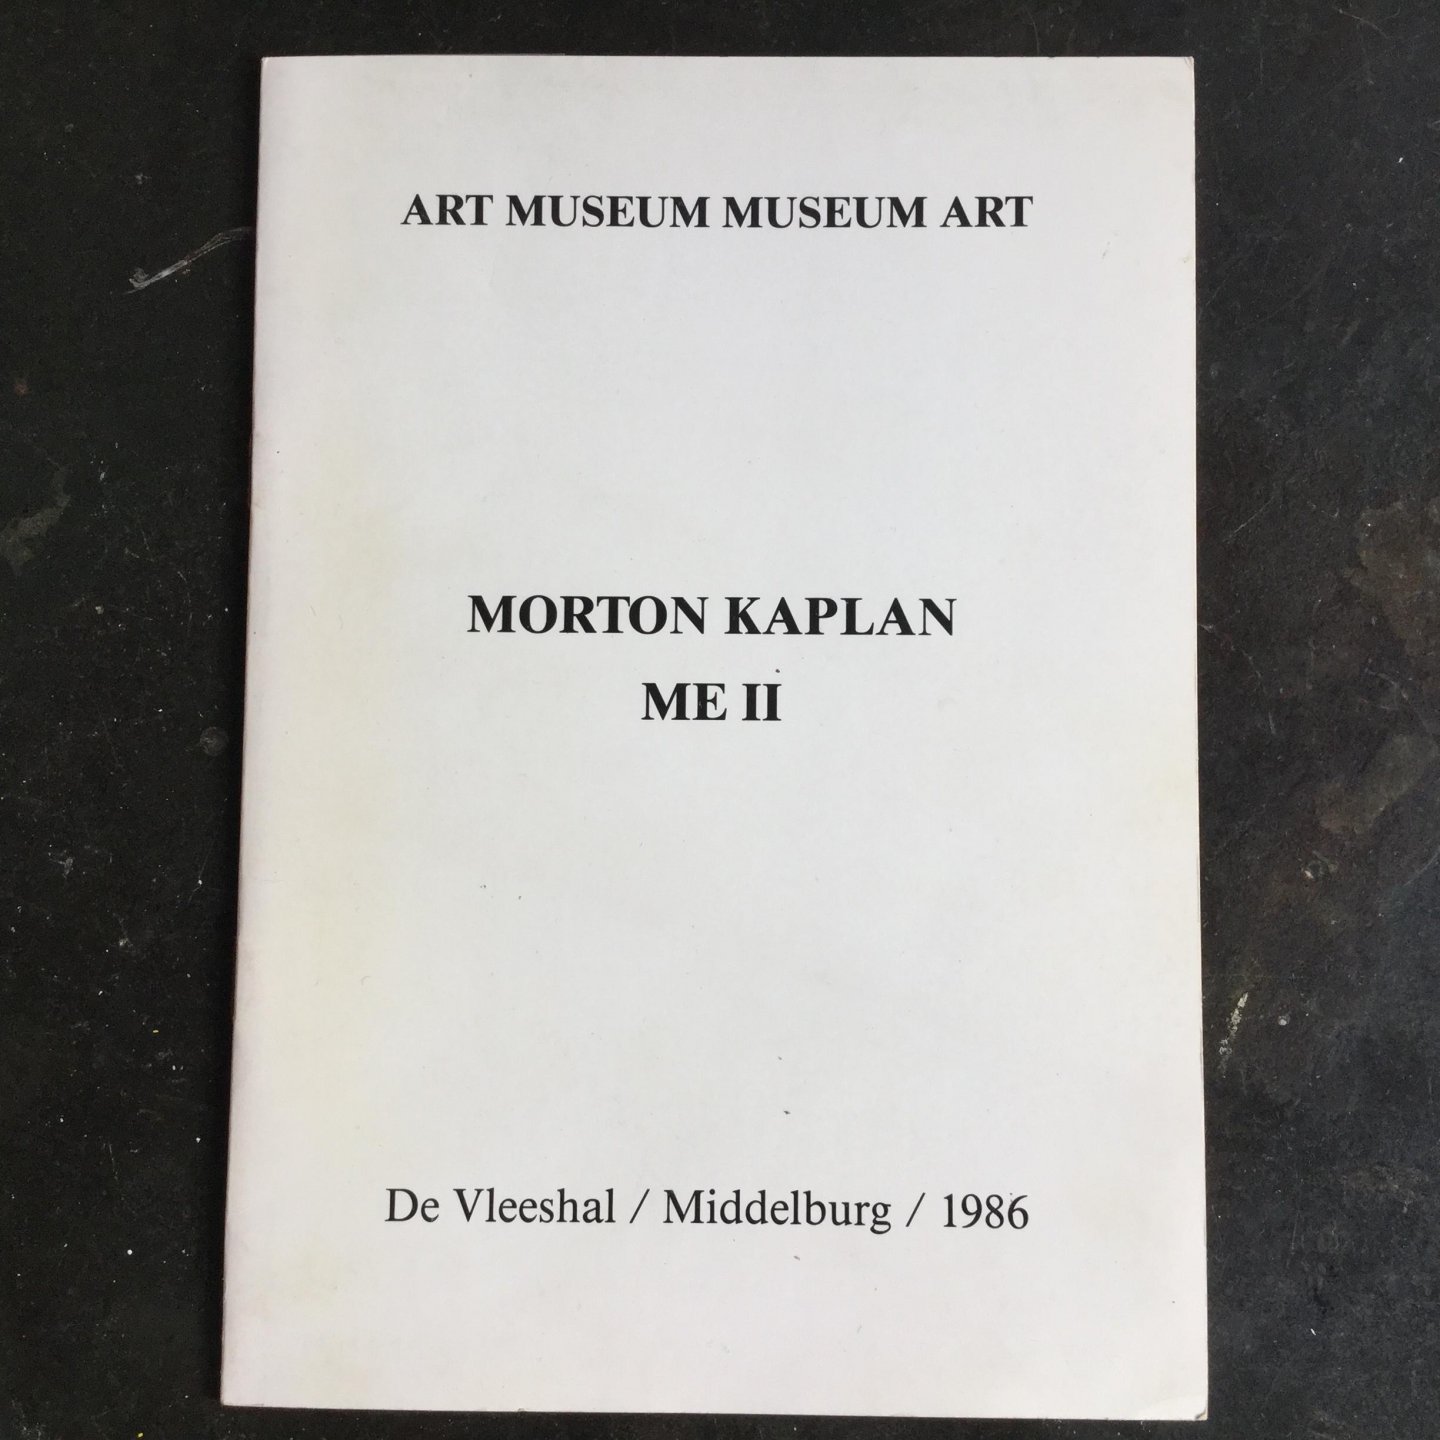 gemert, anton van (from a conversation with Morton Kaplan) - Morton Kaplan ME II